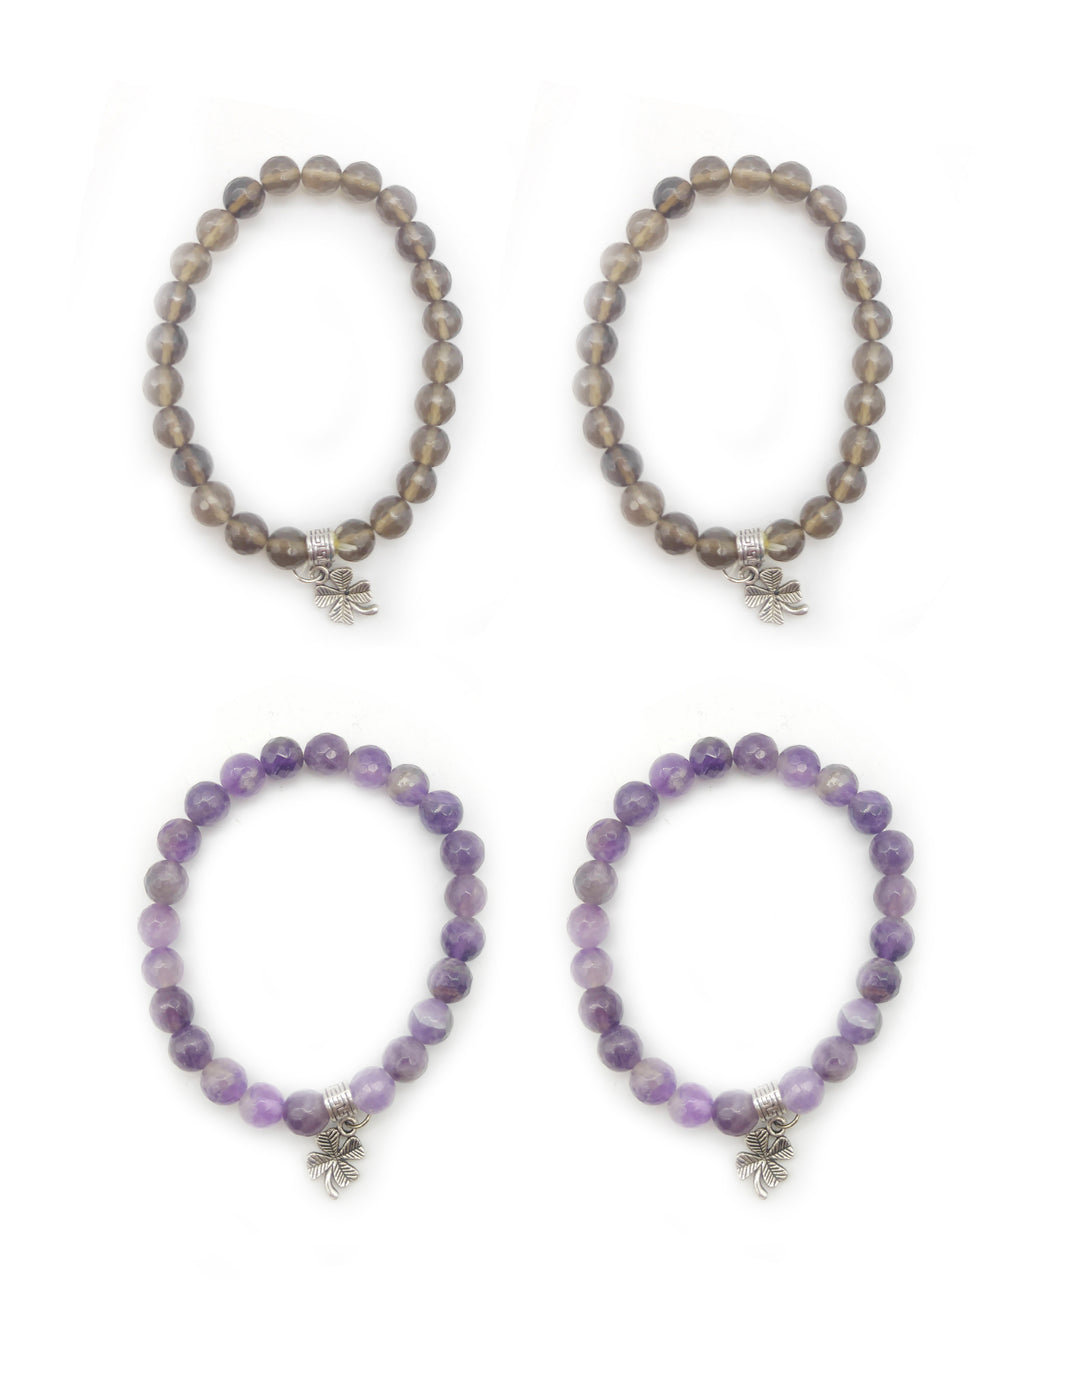 Multicolor handcrafted smoky quartz gemstone bracelet set of 4